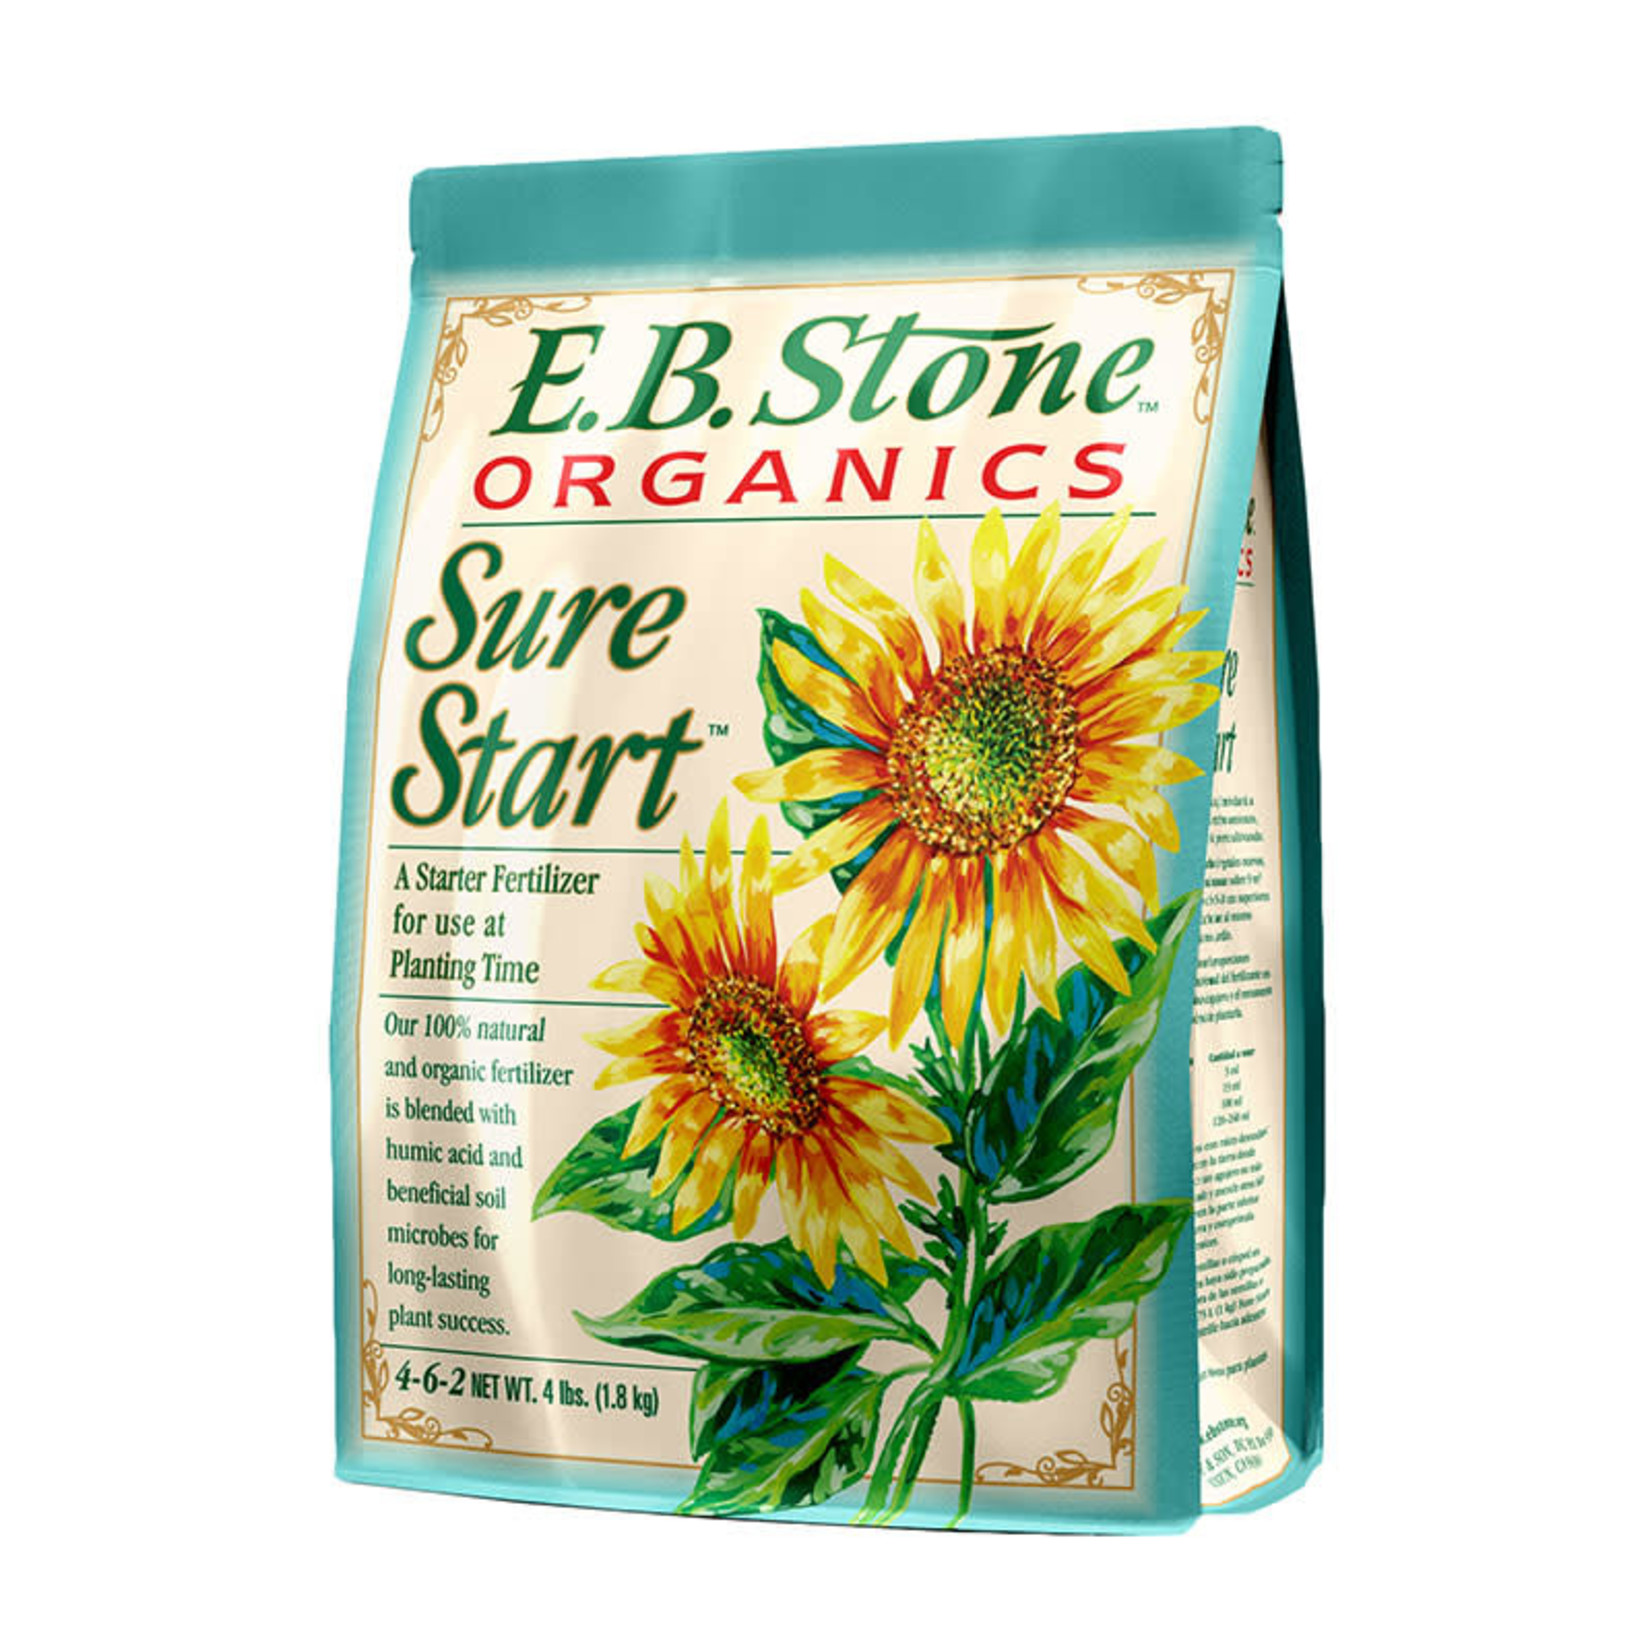 E.B. Stone Organics E.B. Stone Sure Start 4-6-2